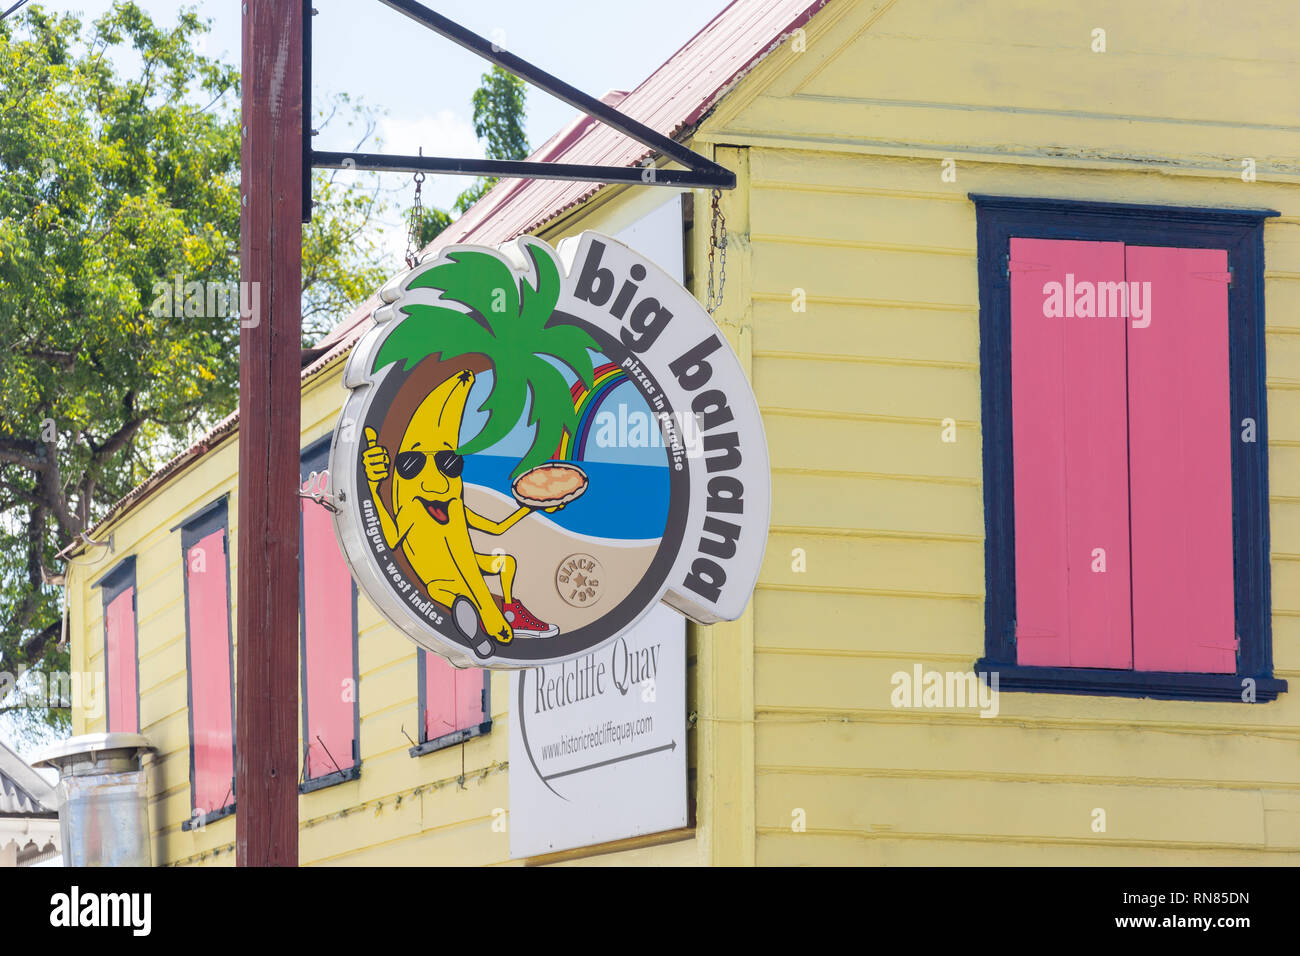 'Big Banana' pizza sign in historic Redcliffe Quay, St John's, Antigua, Antigua and Barbuda, Lesser Antilles, Caribbean Stock Photo